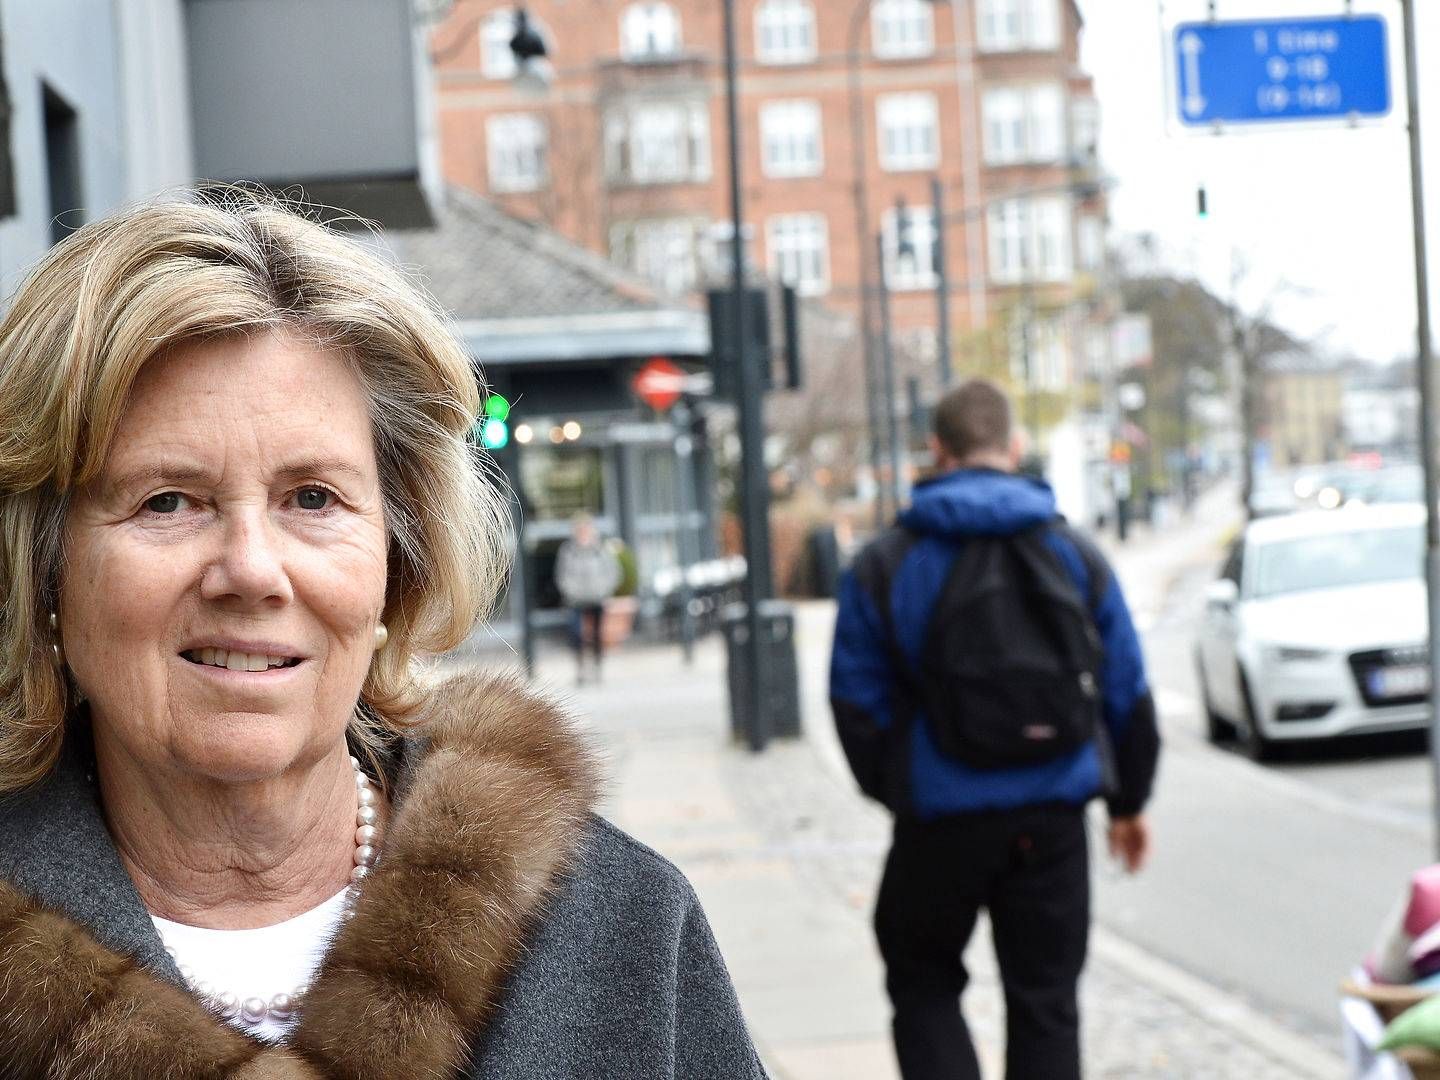 Annette Sadolin fylder 75 år den 4. januar. | Foto: Mik Eskestad/Jyllands-Posten/Ritzau Scanpix